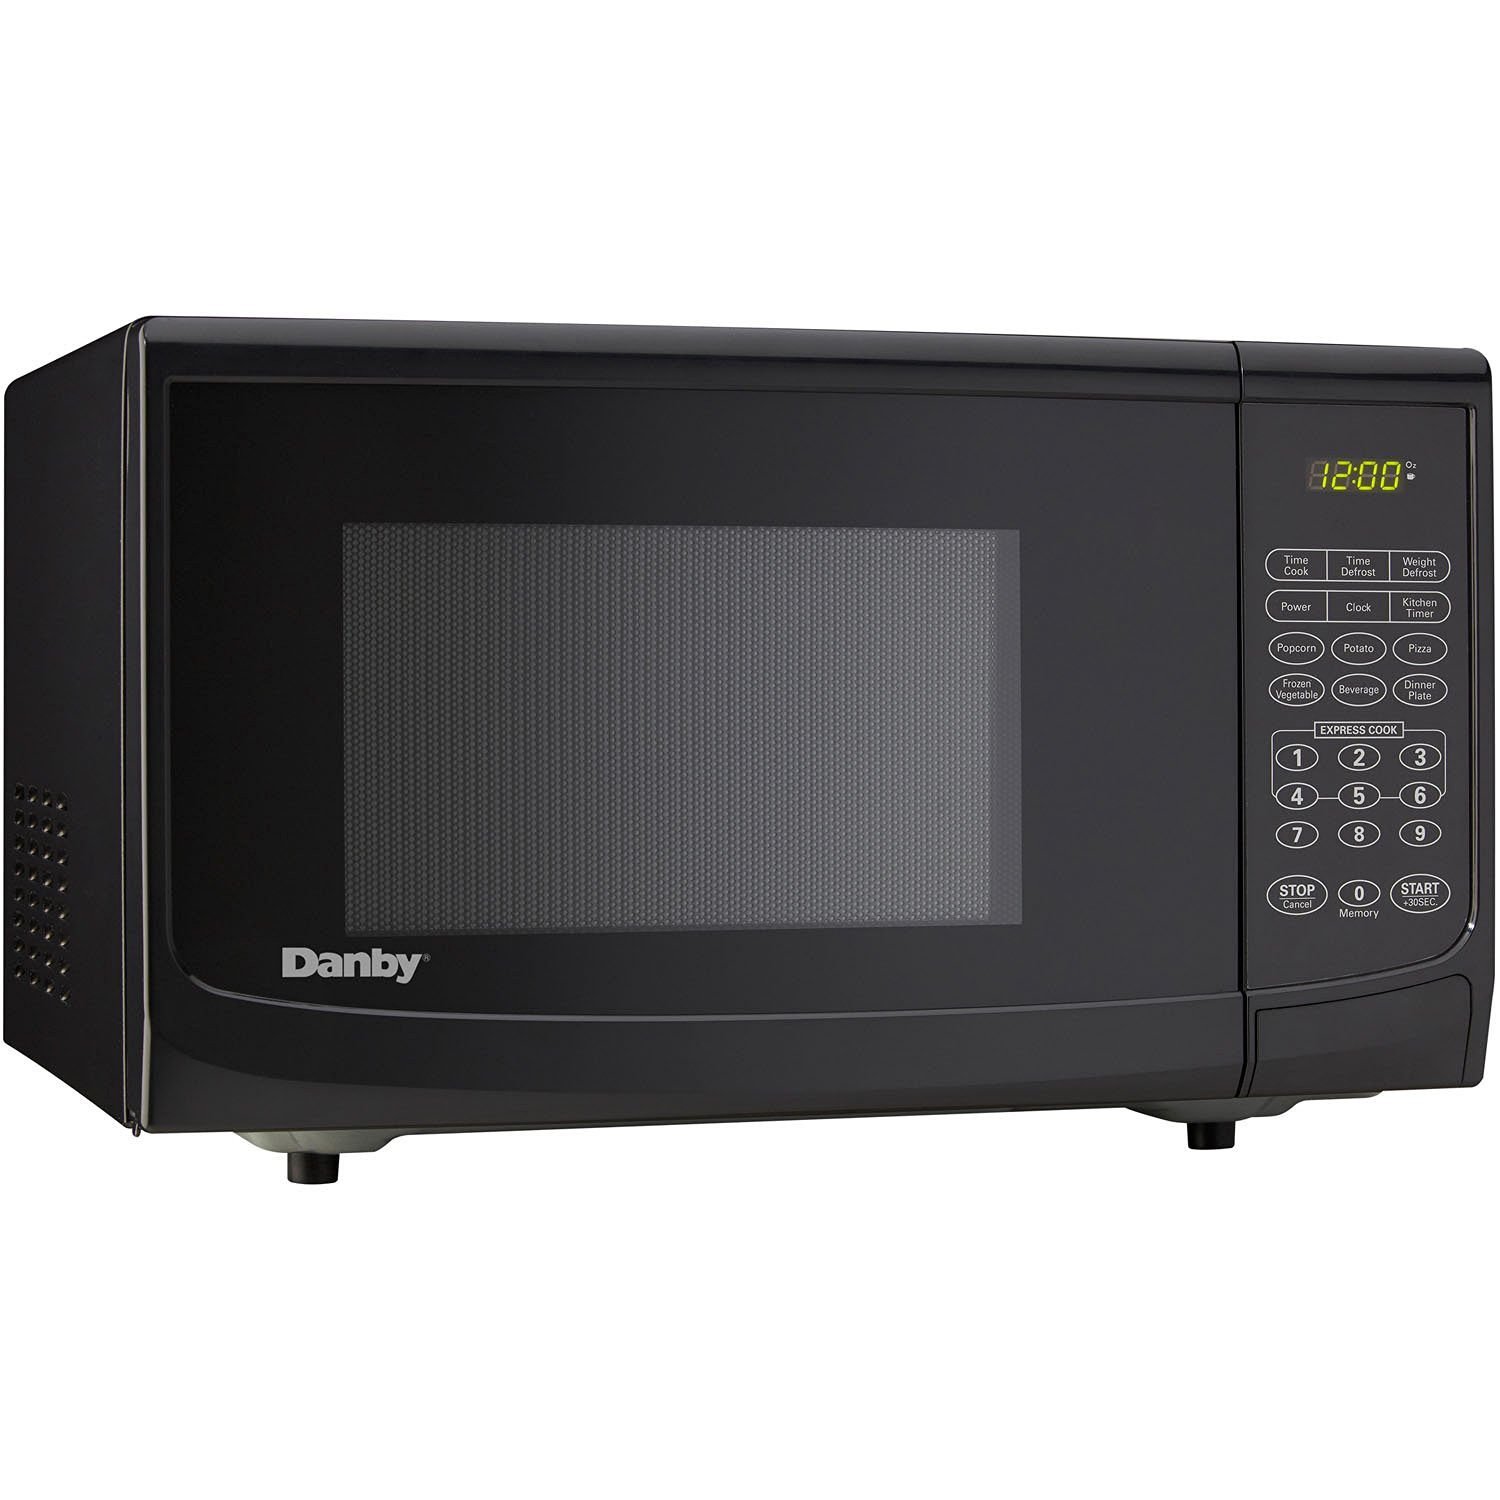 Danby DMW7700BLDB Microwave Oven